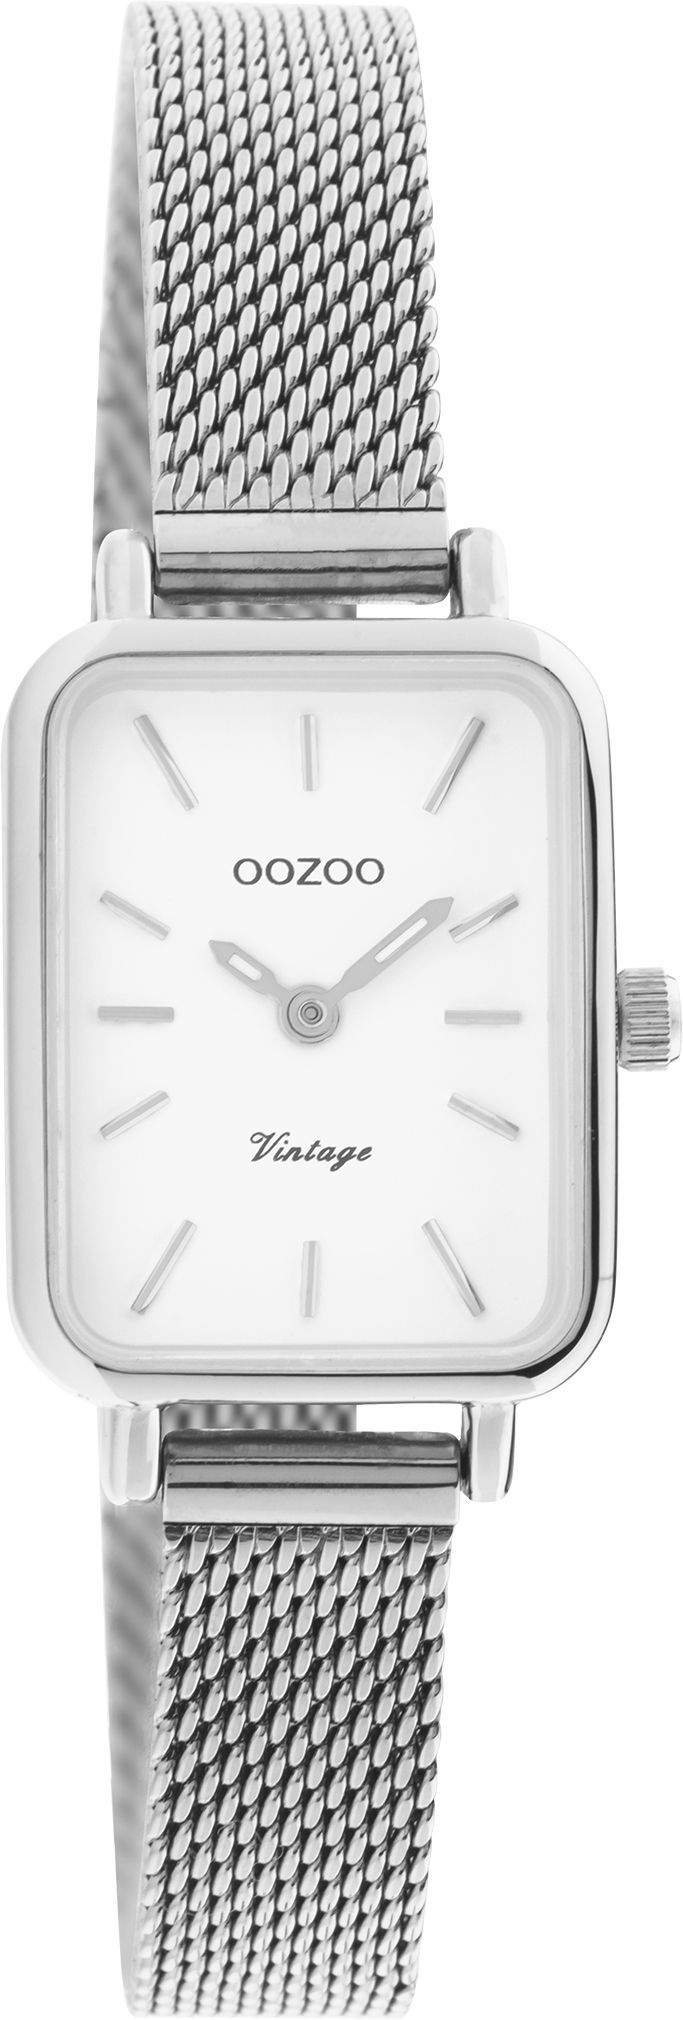 OOZOO Vintage C20266 in colore argento